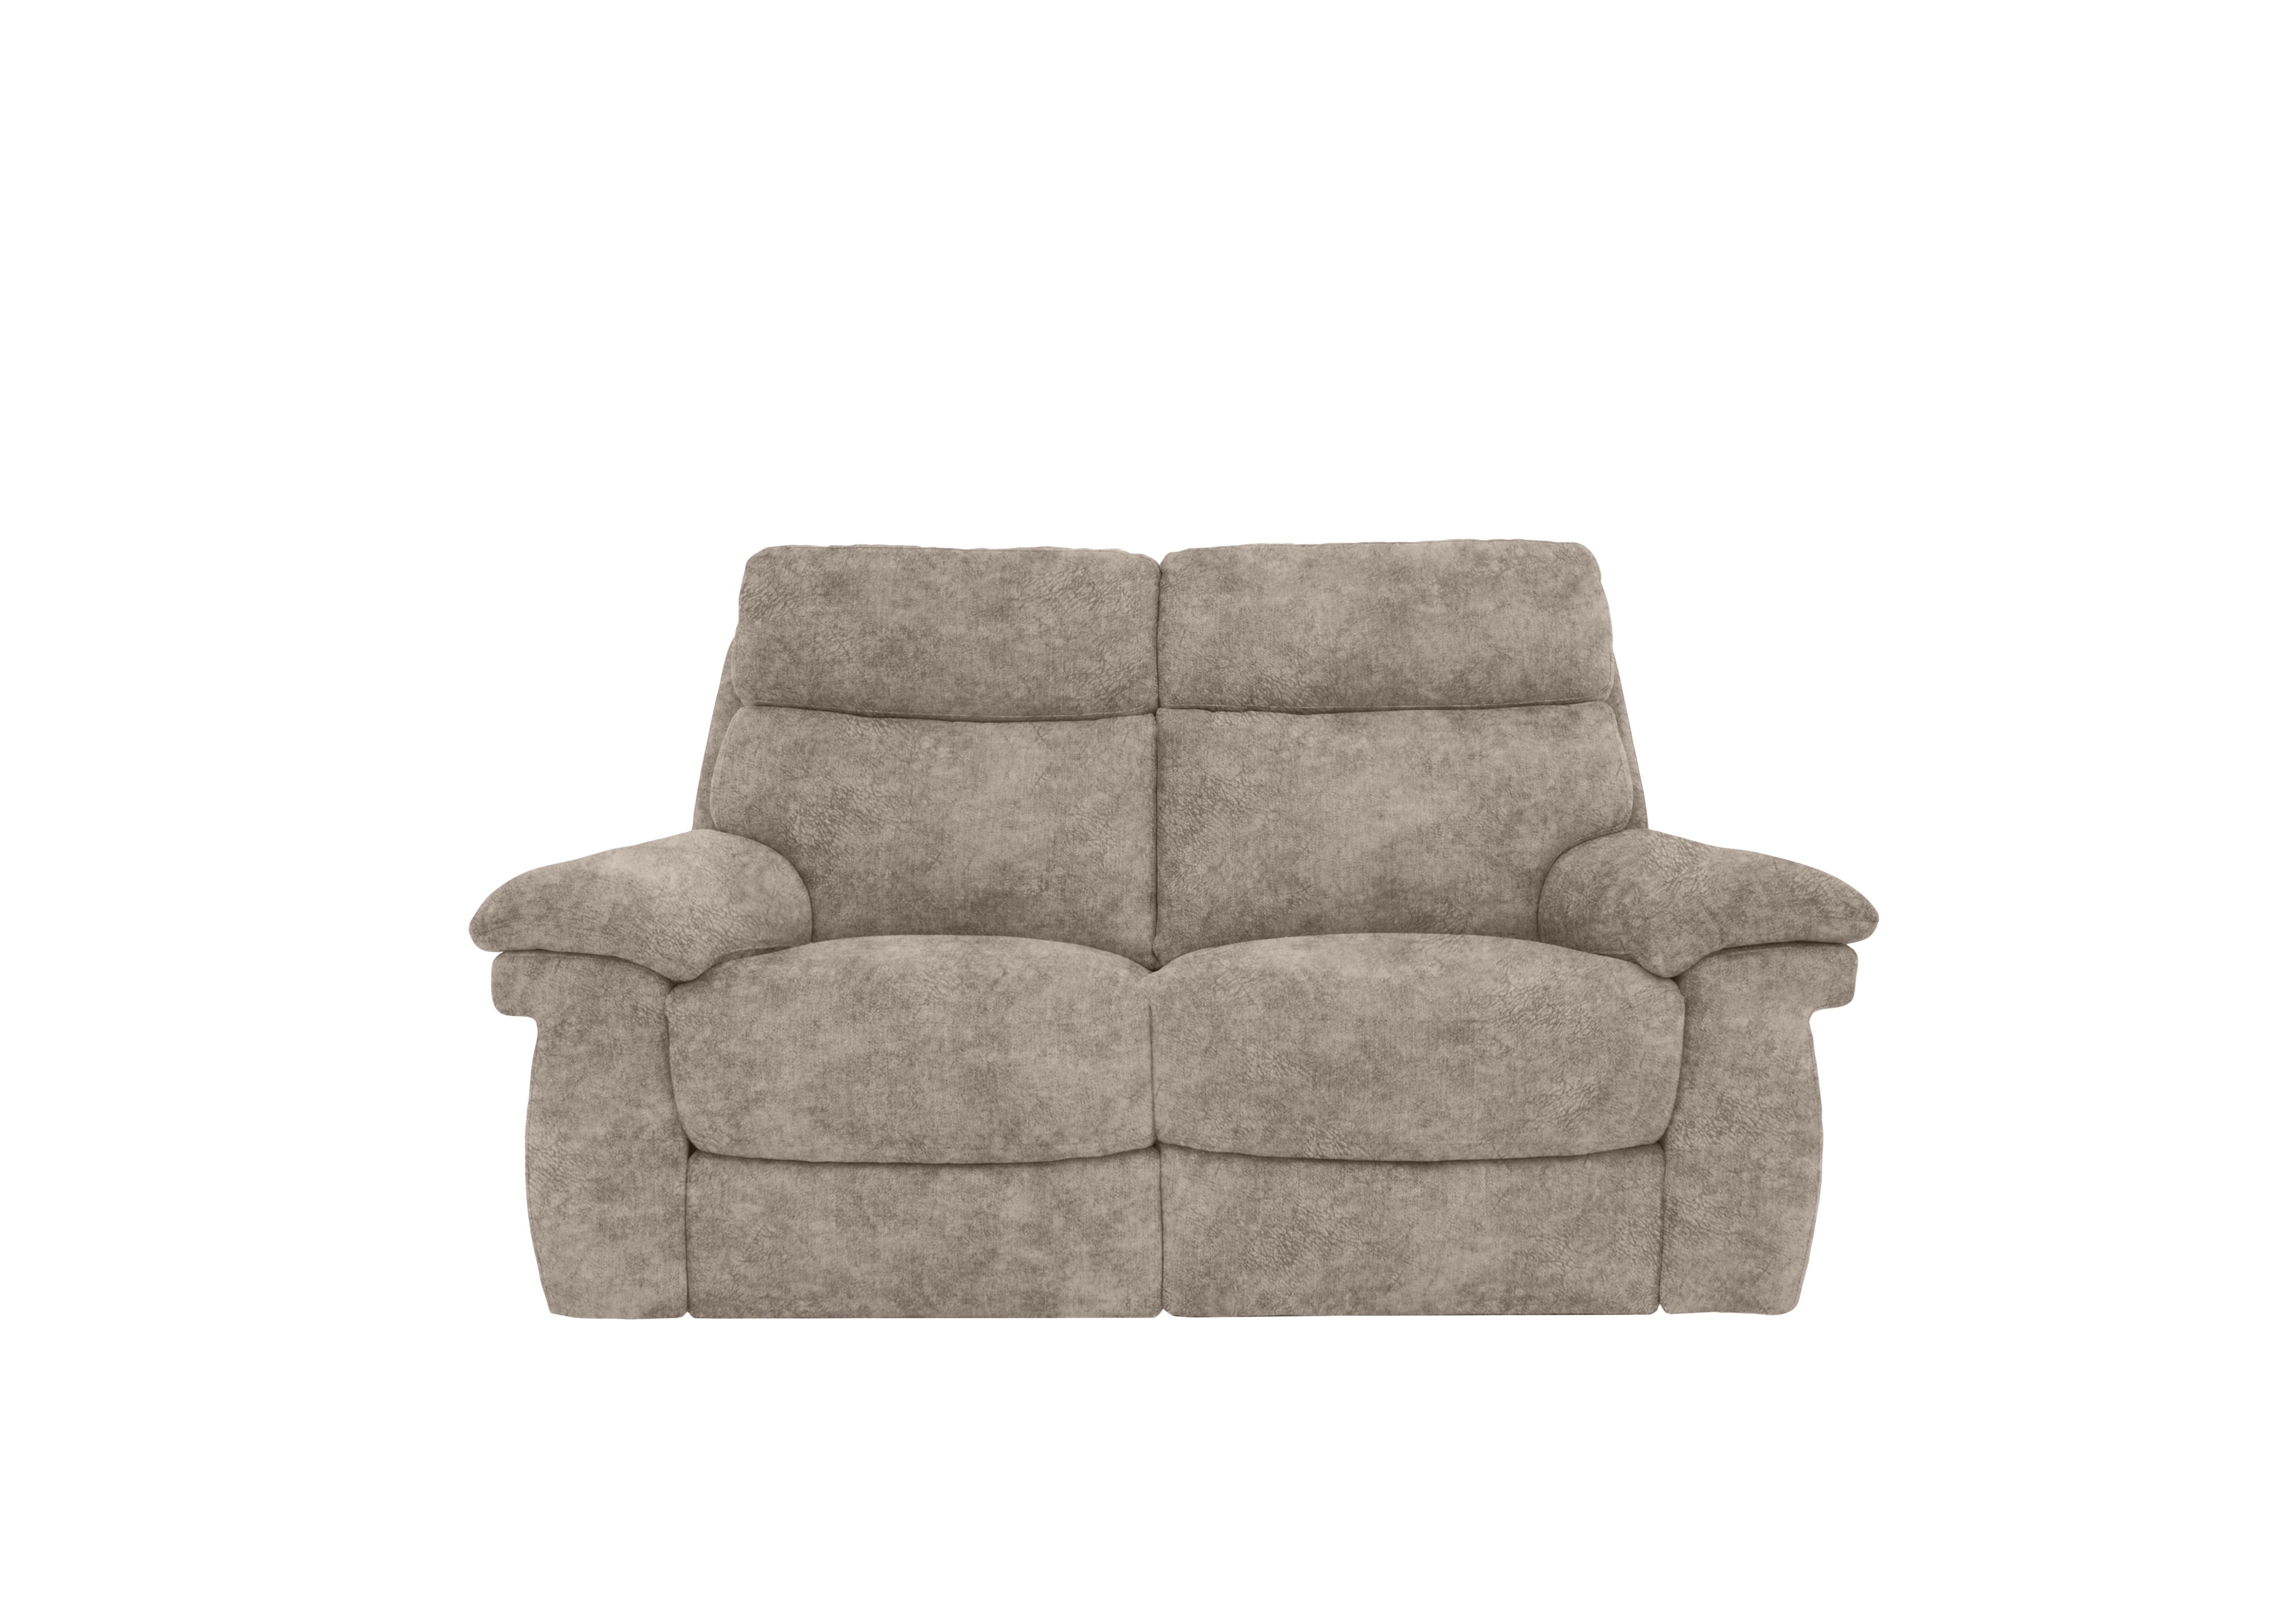 Serene 2 Seater Fabric Sofa in Bfa-Bnn-R29 Mink on Furniture Village